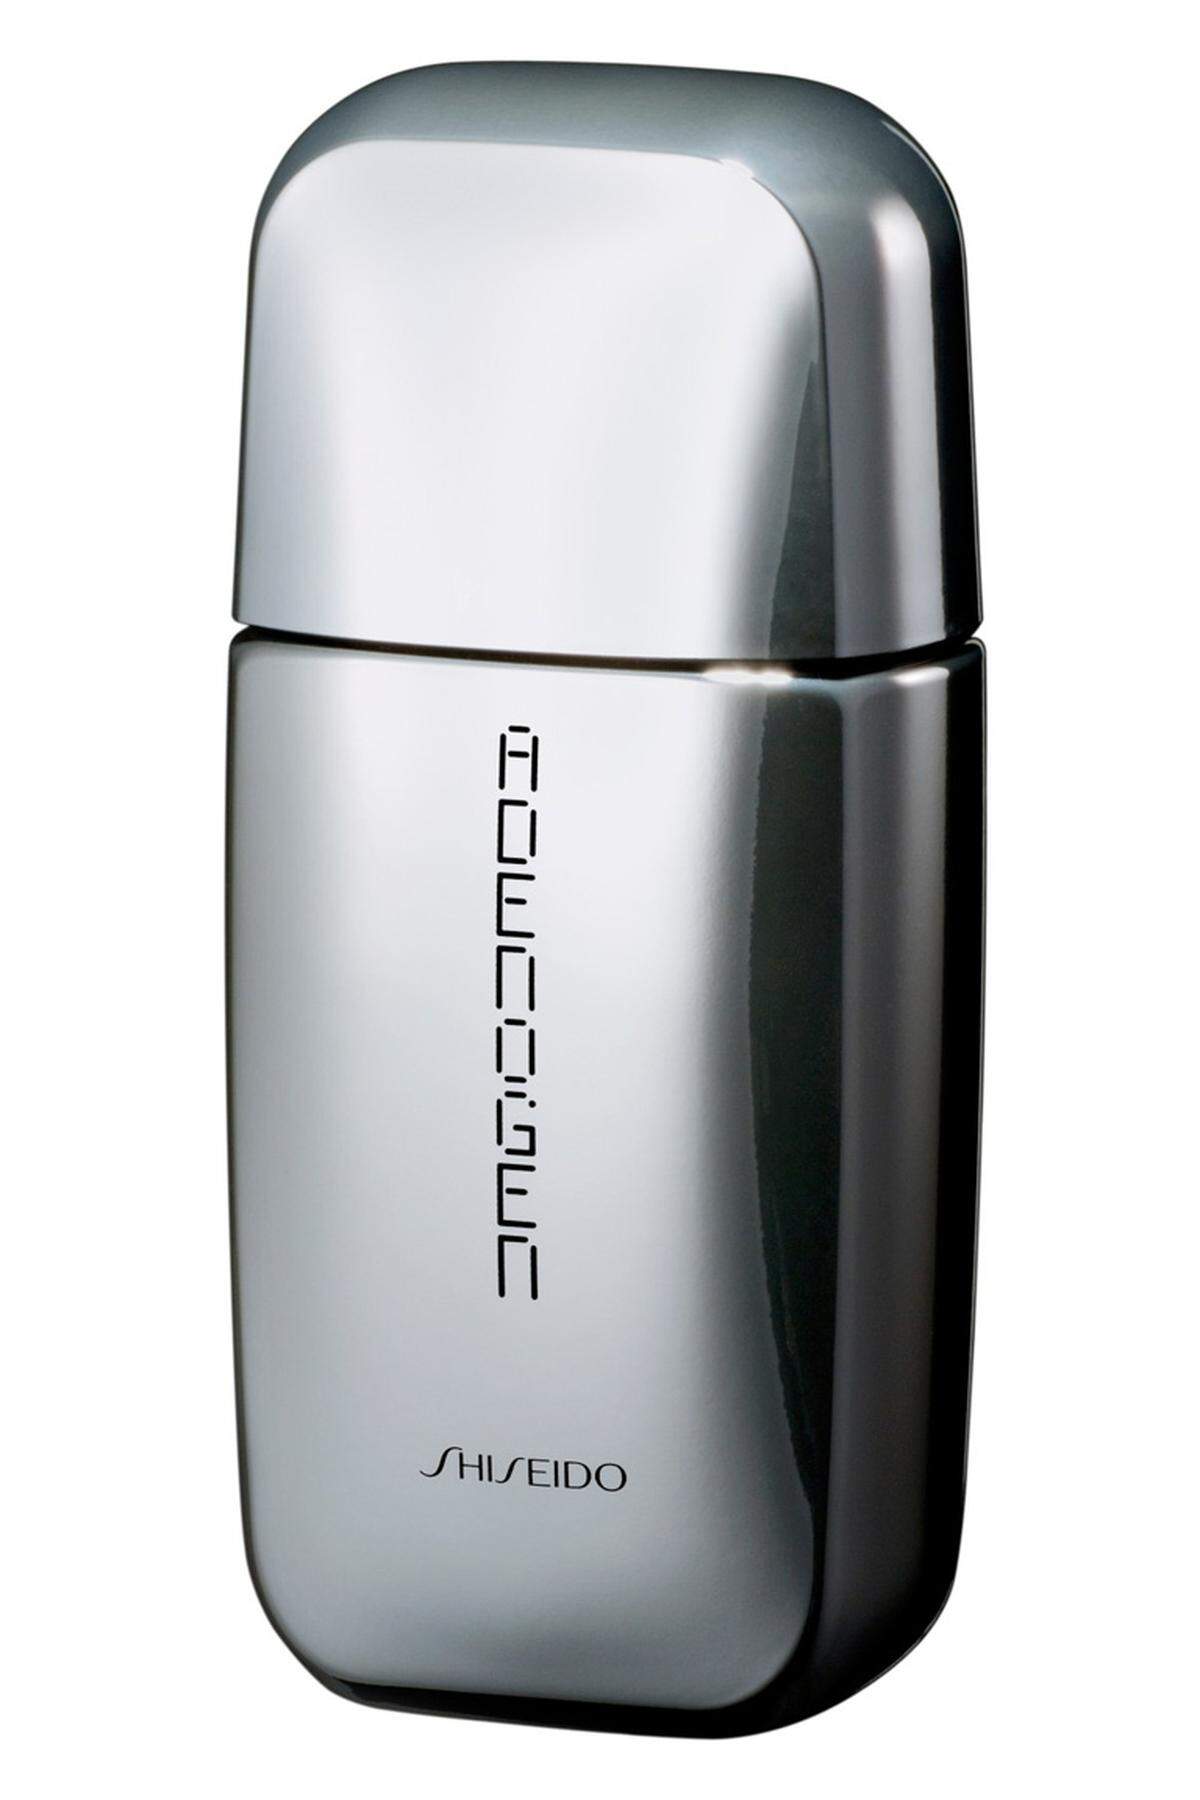 Haarausfall soll das Adenogen - Hair Energizing Formula Haarserum von Shiseido entgegenwirken, 64,90 Euro.